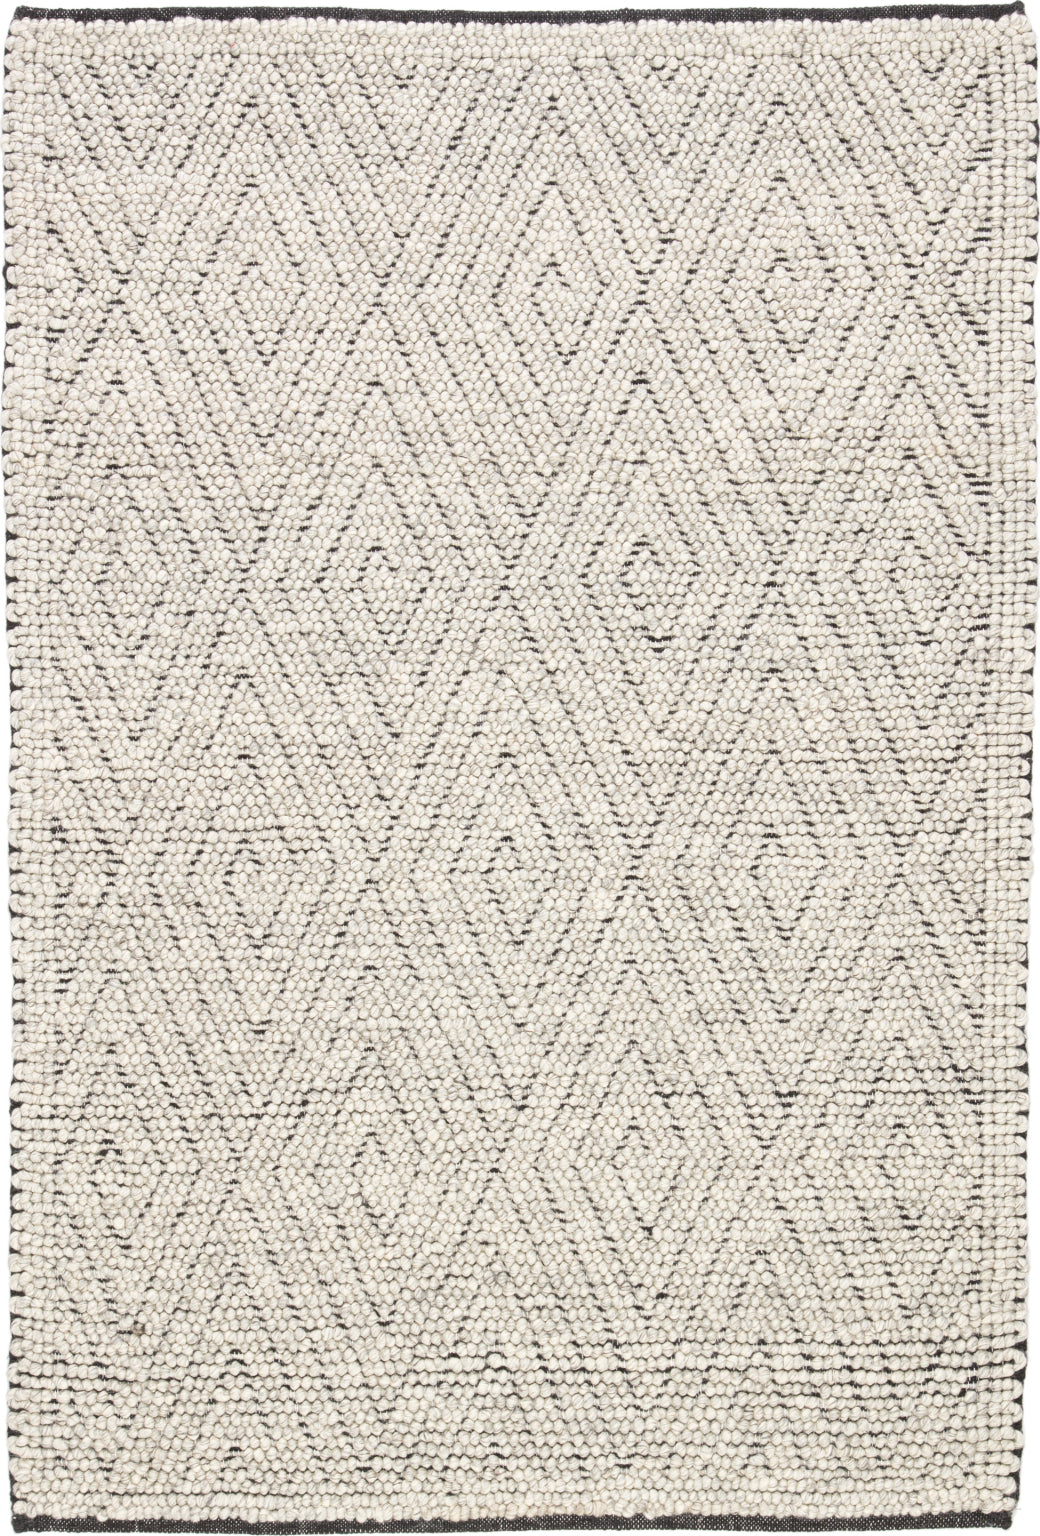 Jaipur Genteel Striped Gray/ Cream Area Rug - 2'8 x 8